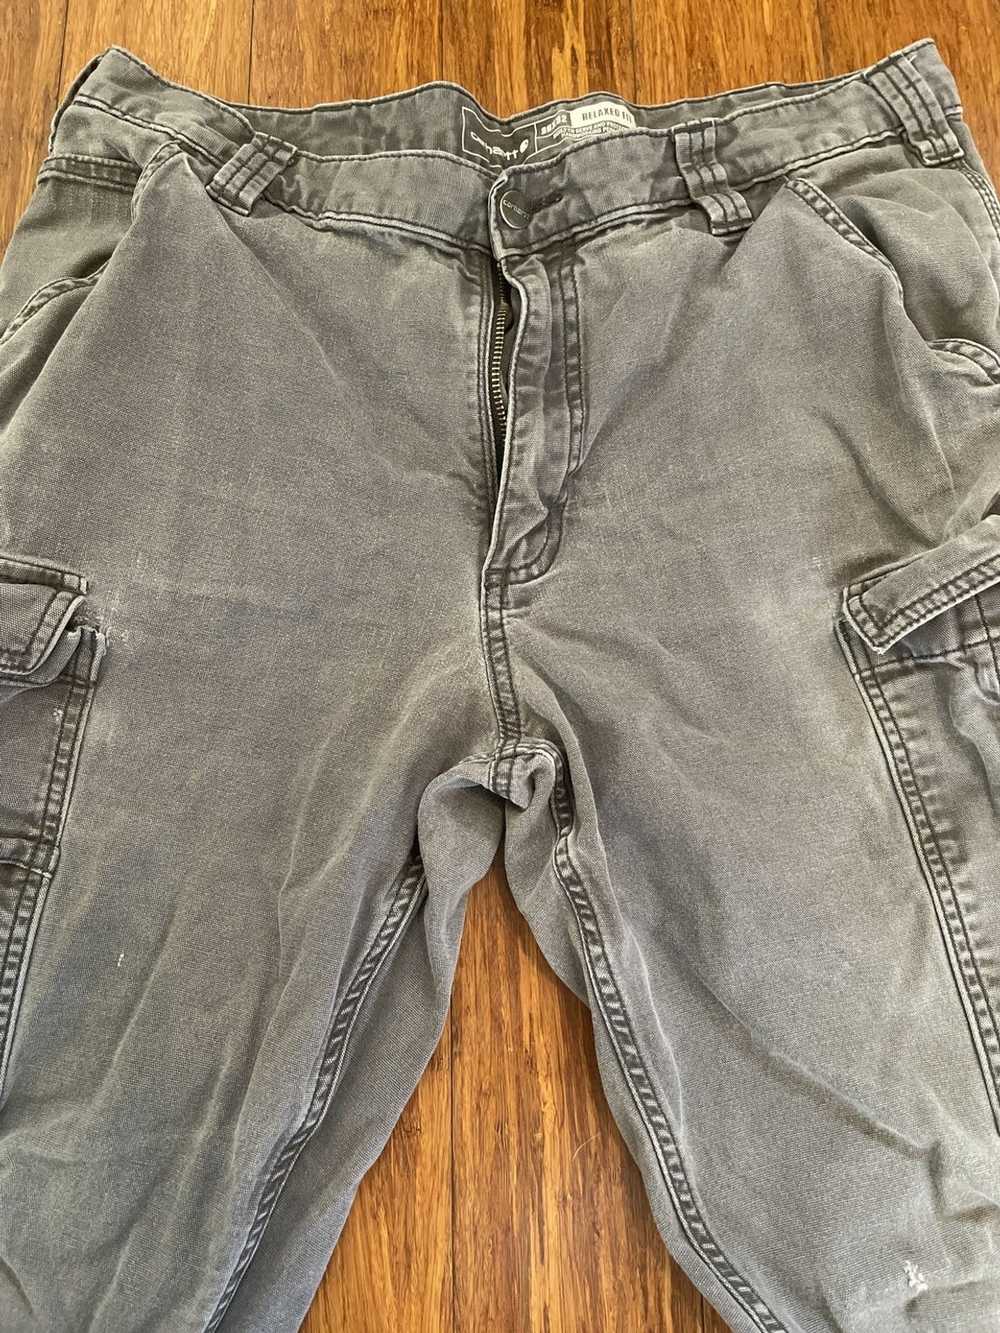 Carhartt Distressed Grey Carhartt Cargo Pants - image 5